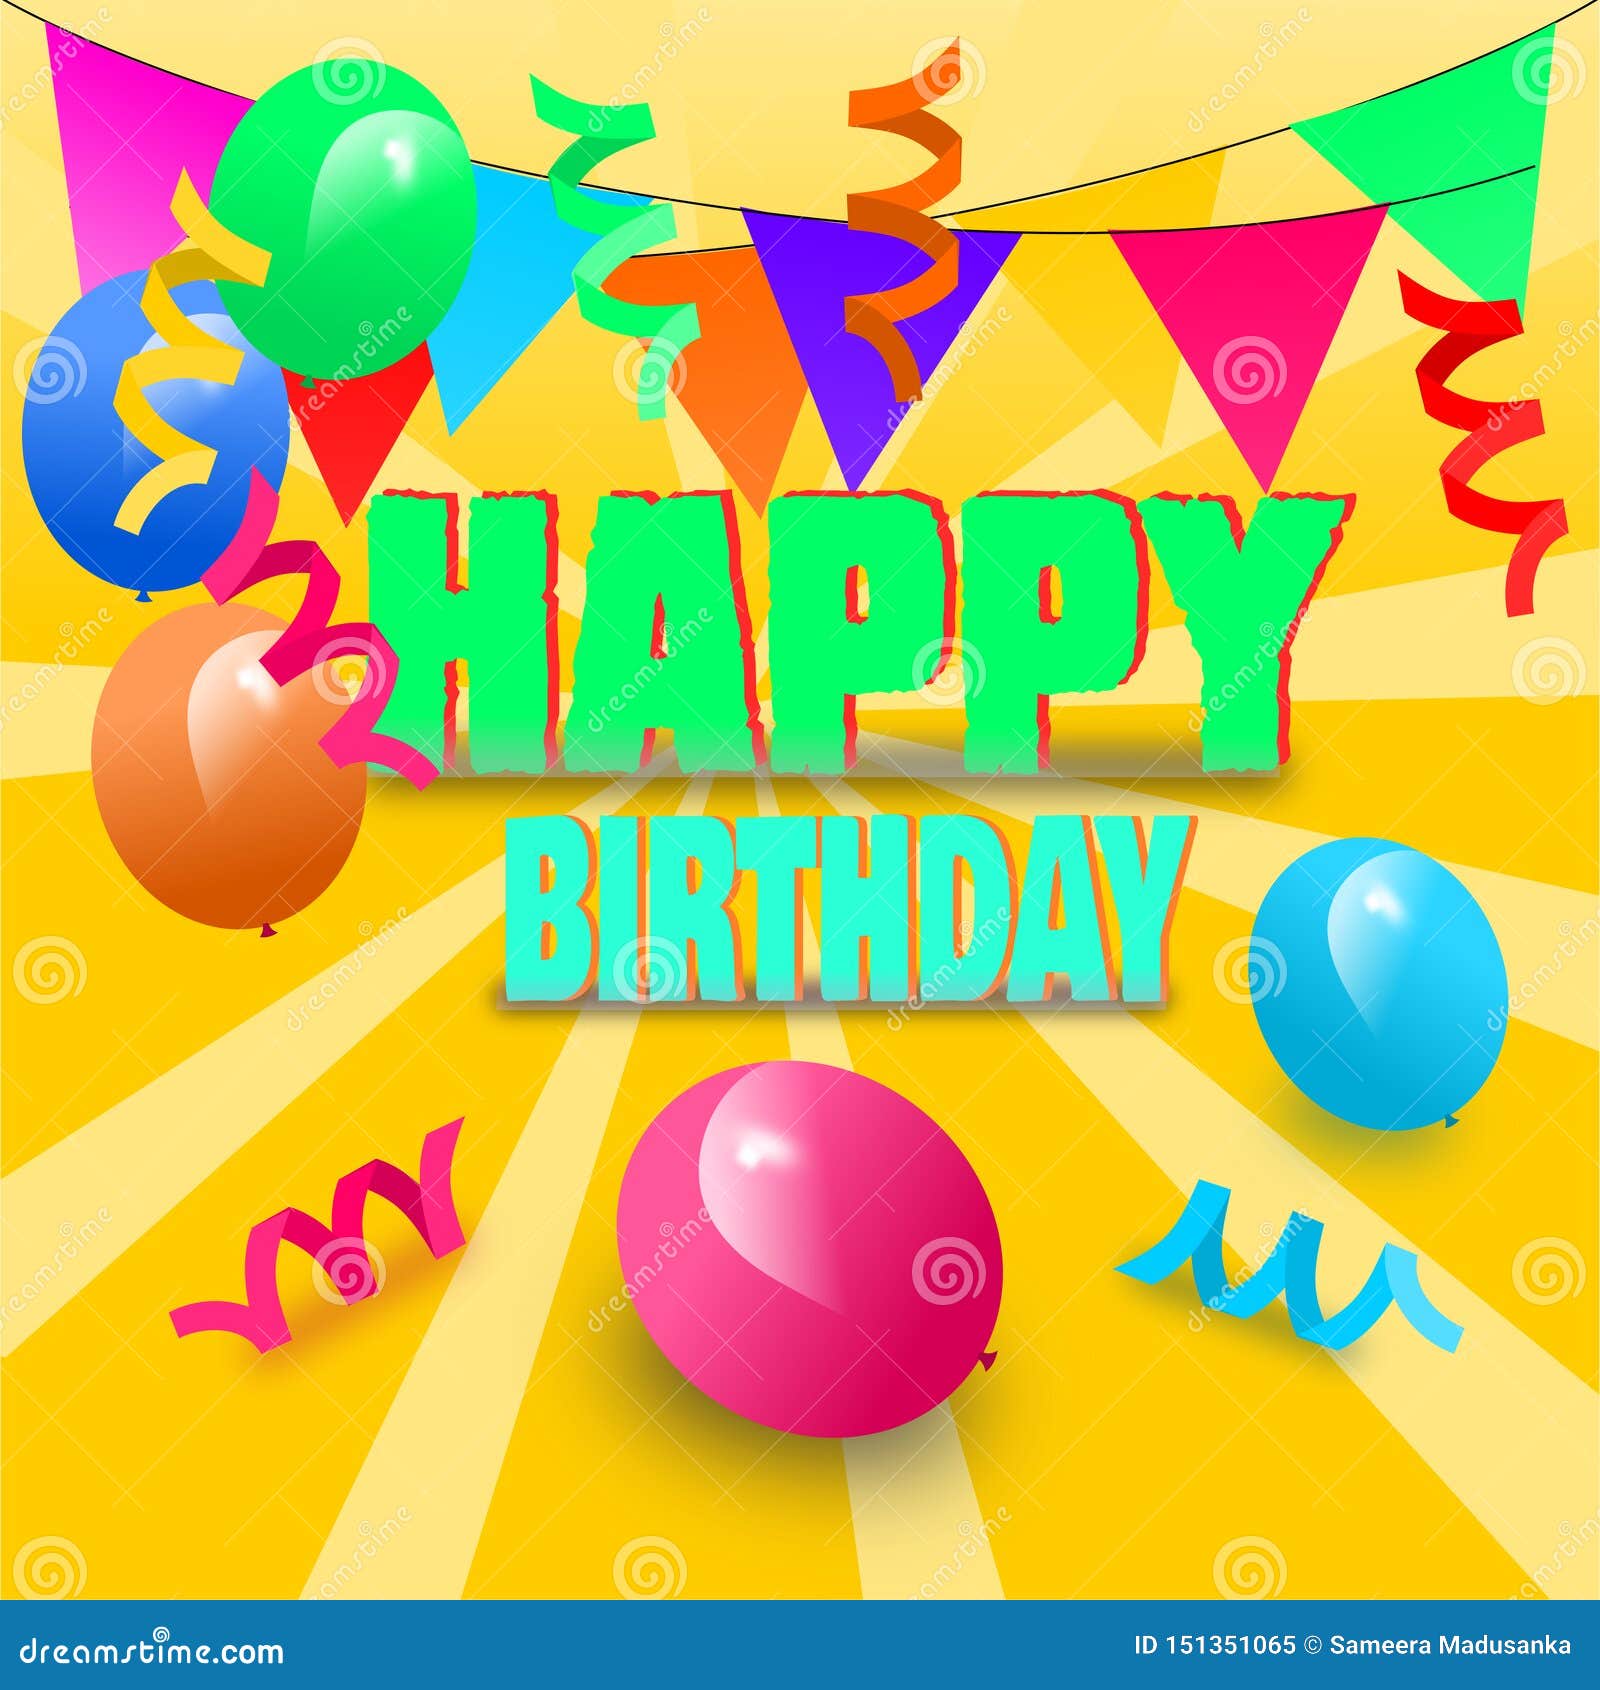 Decorative Colorful Happy Birthday Greeting. Stock Illustration ...